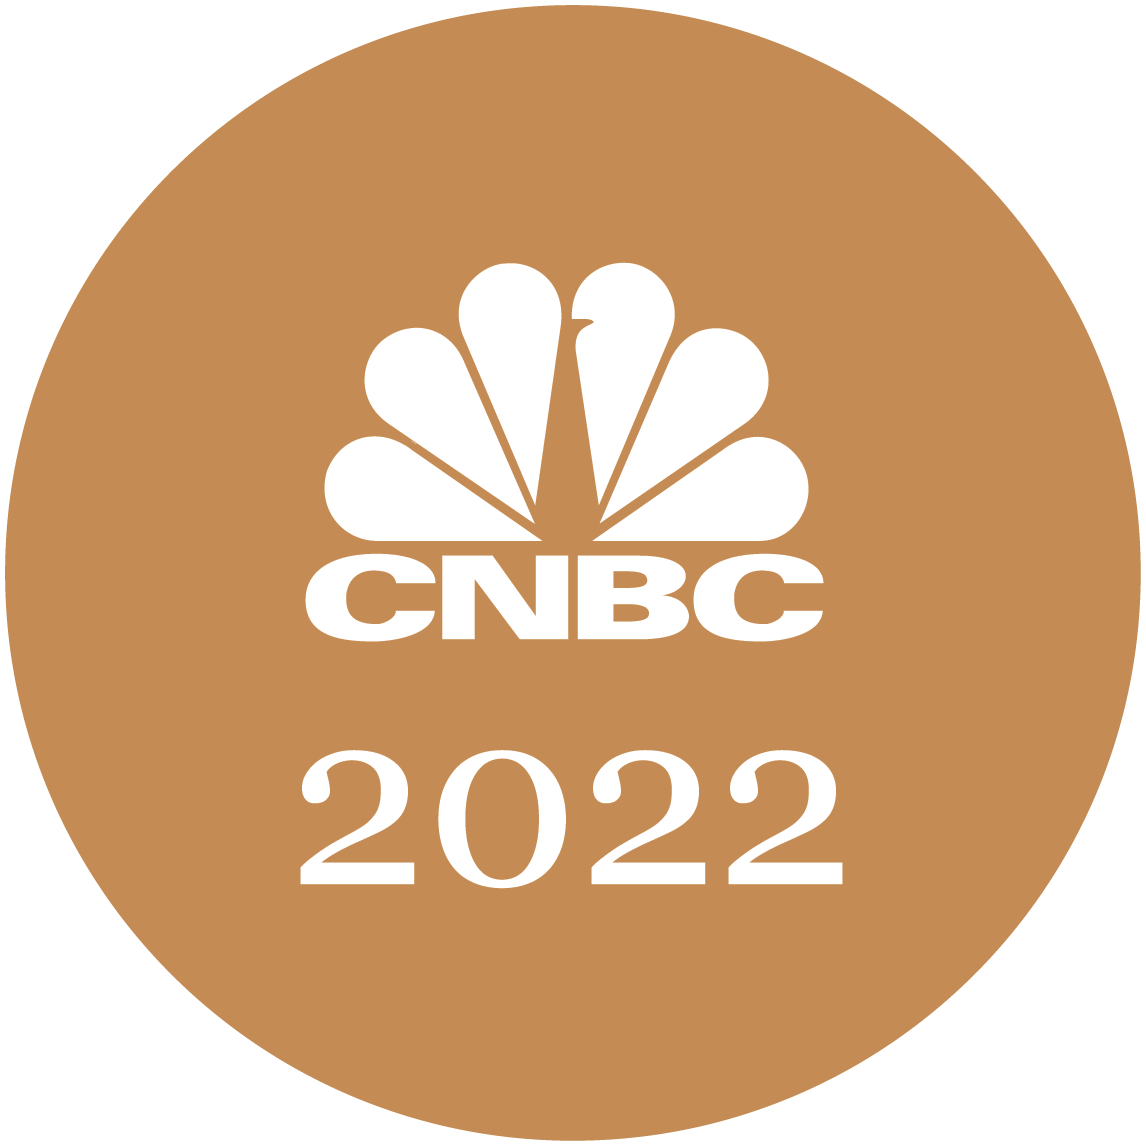 Sheaff Brock investment advisor, CNBC FA100, top rated financial advisor 2022